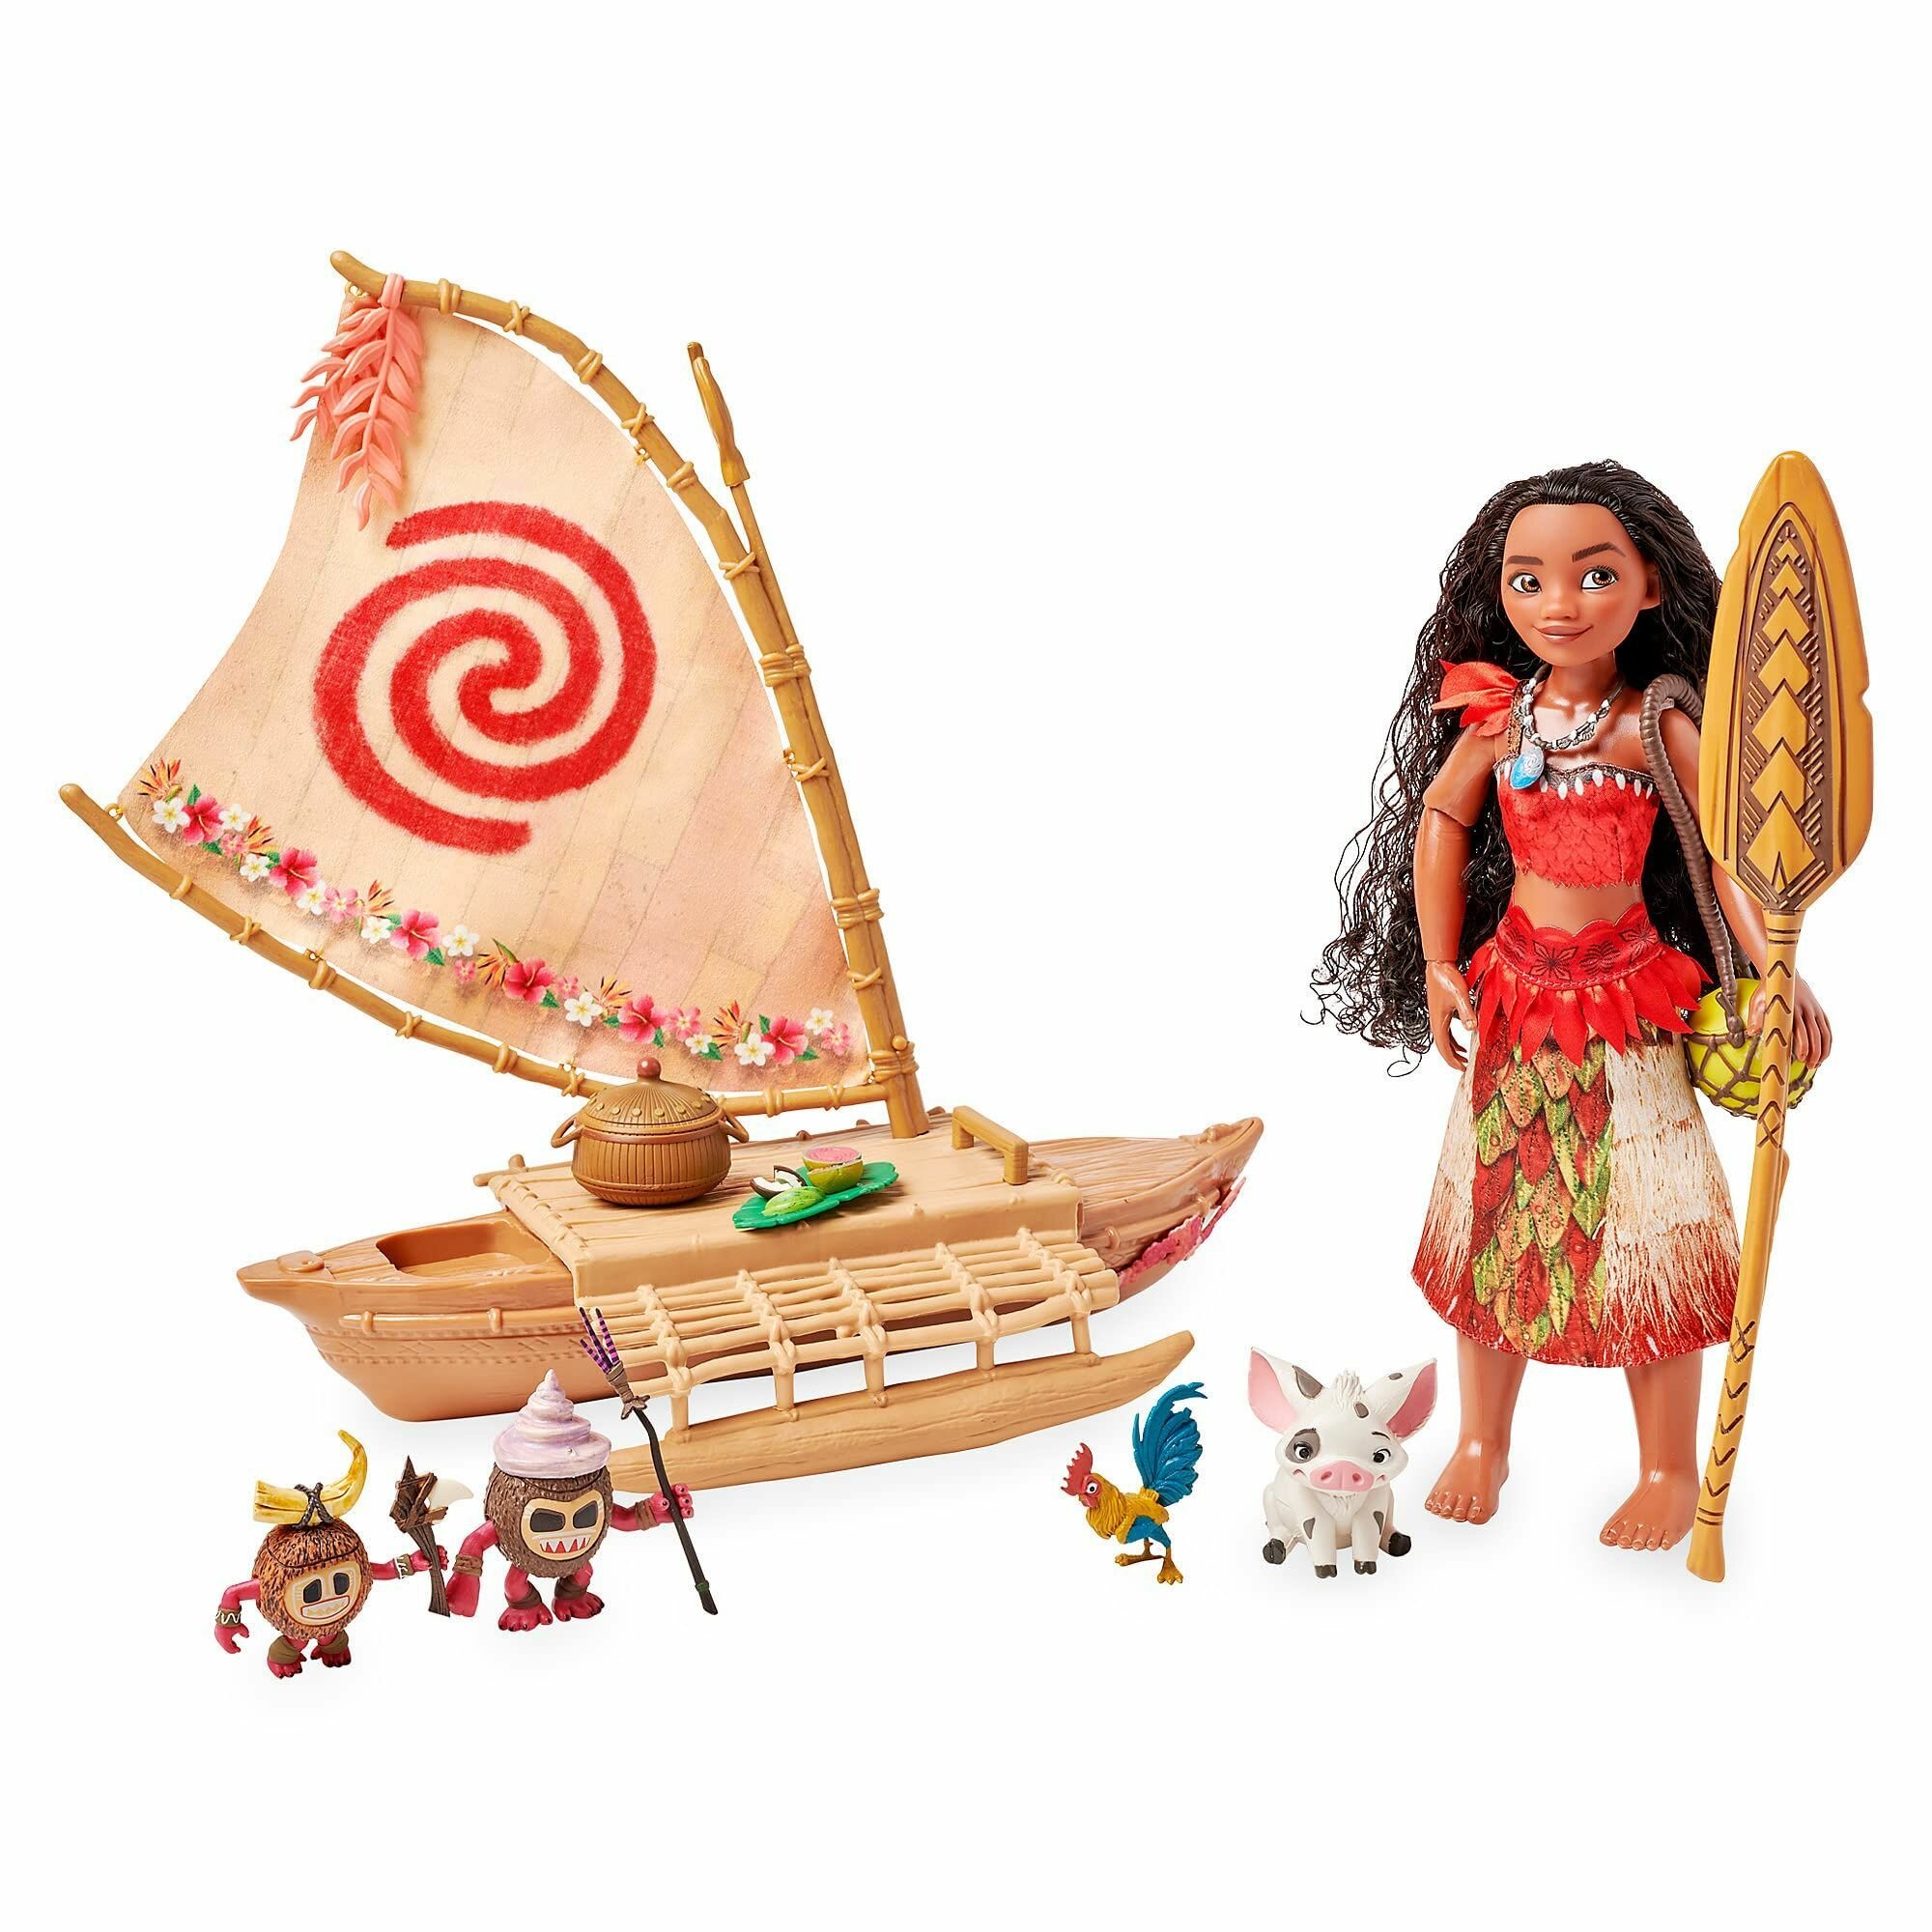 Моана кукла Disney набор с лодкой и питомцами